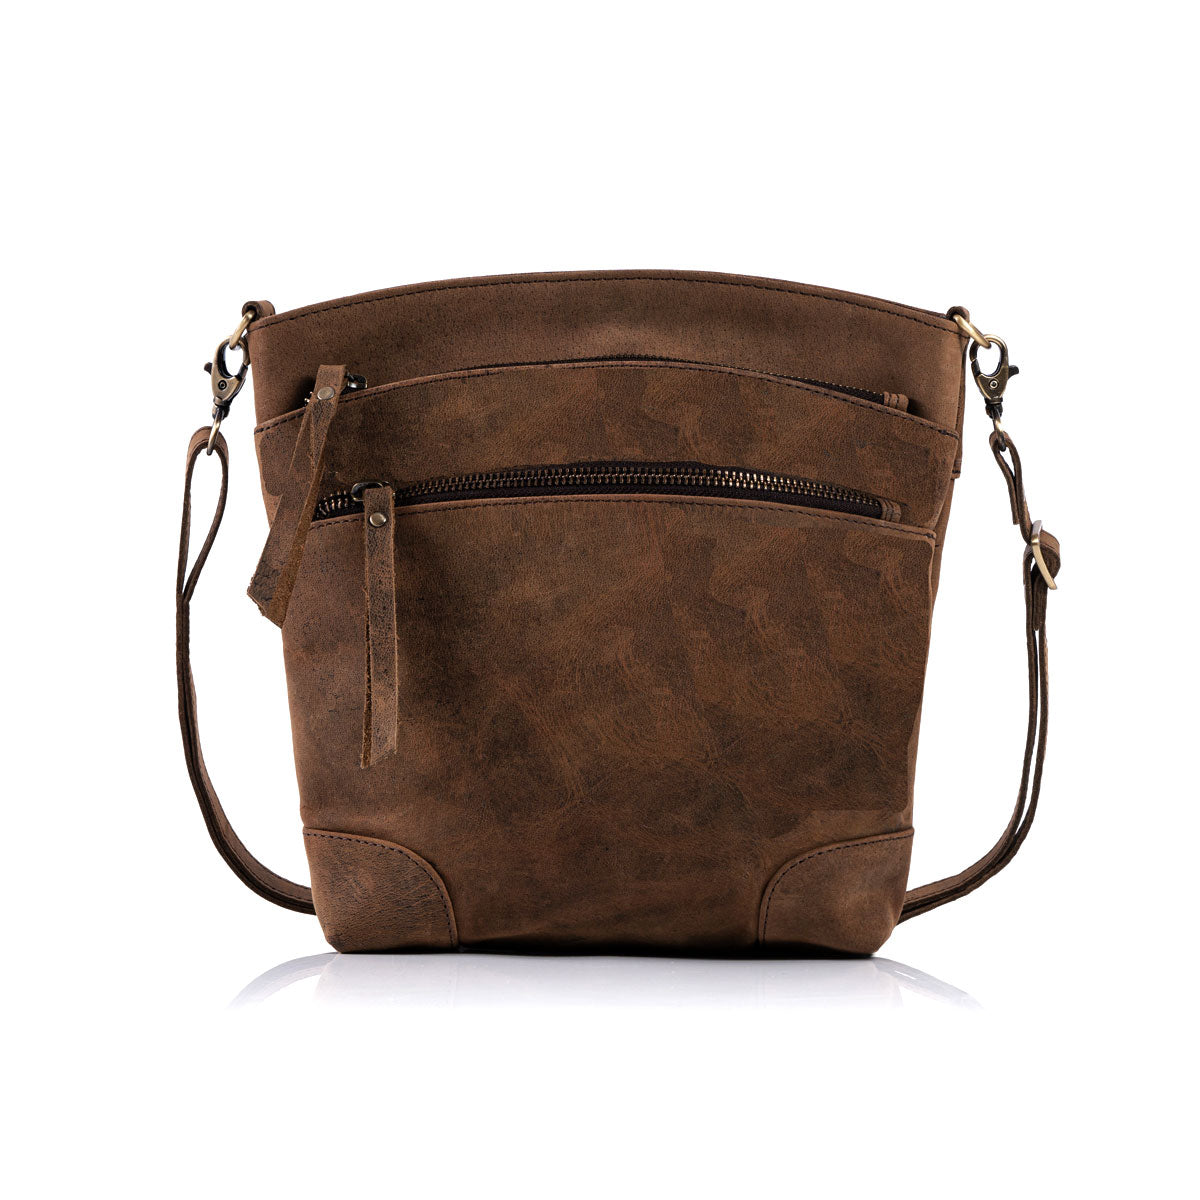 Leather Adjustable Replacement Strap Shoulder Bag Cross Body Bag